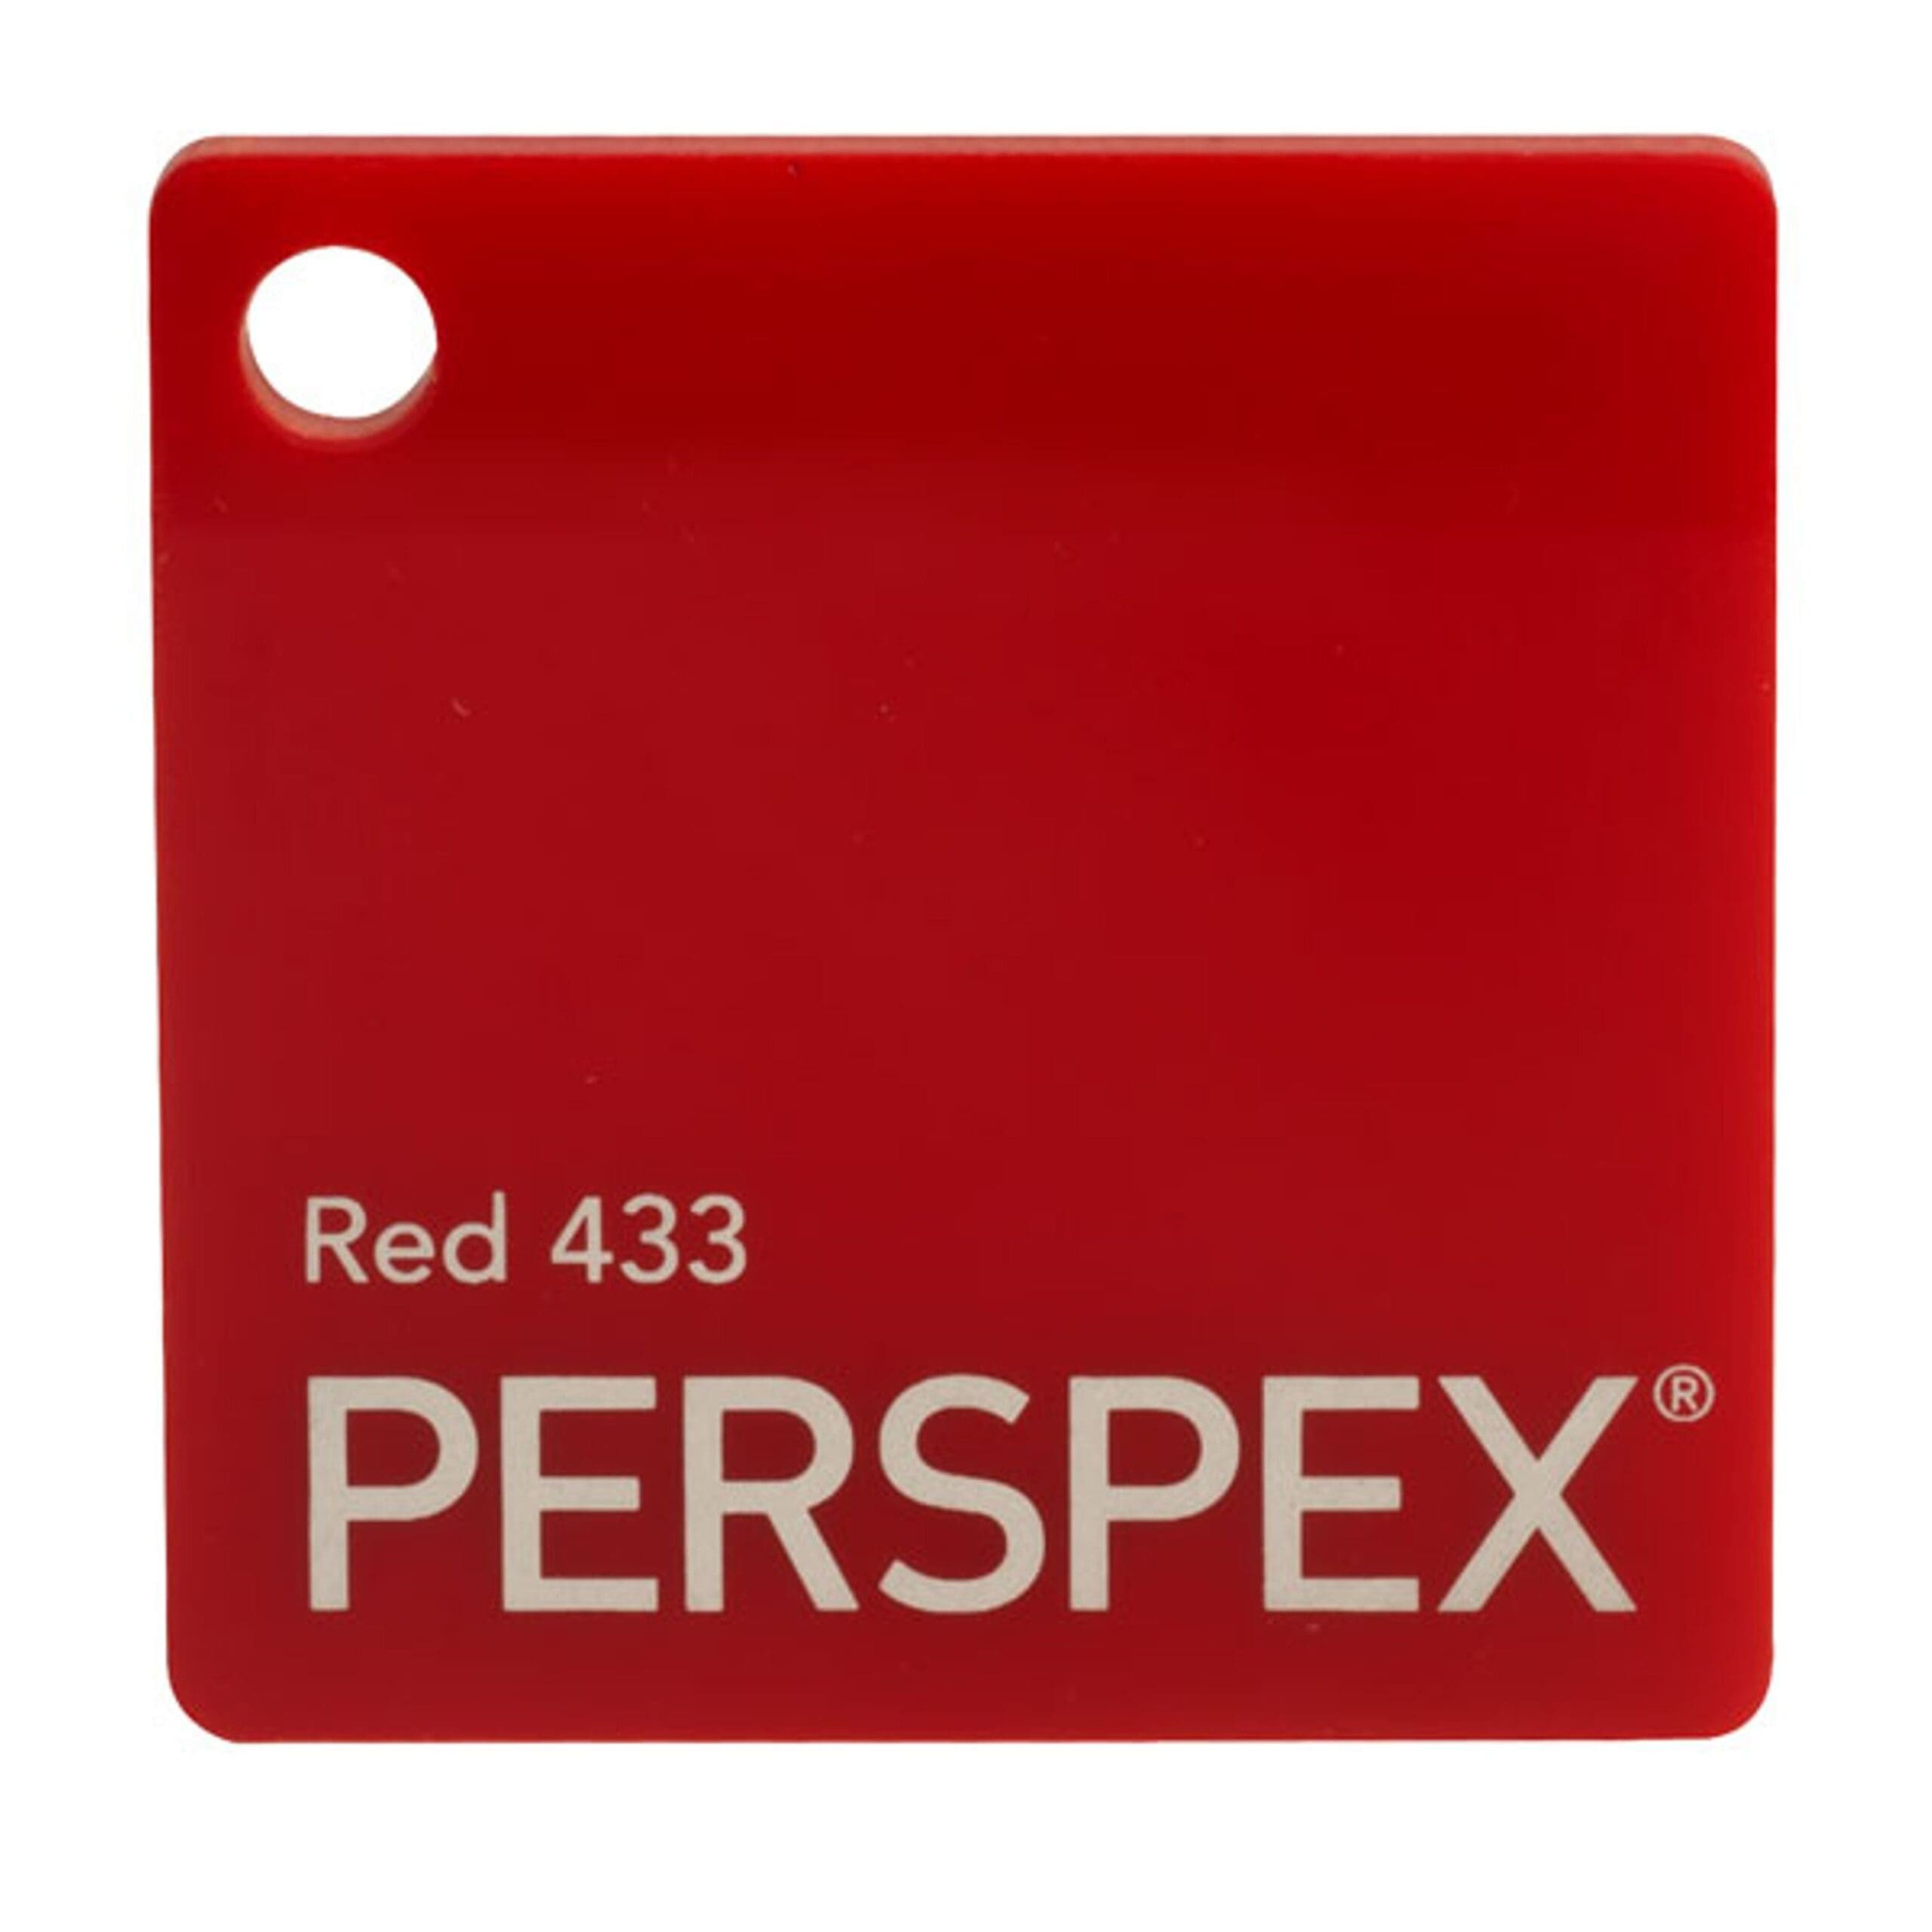 RED 440 PERSPEX ACRYLC SHEET CAST 3MM 2 x A5 PLEXI 